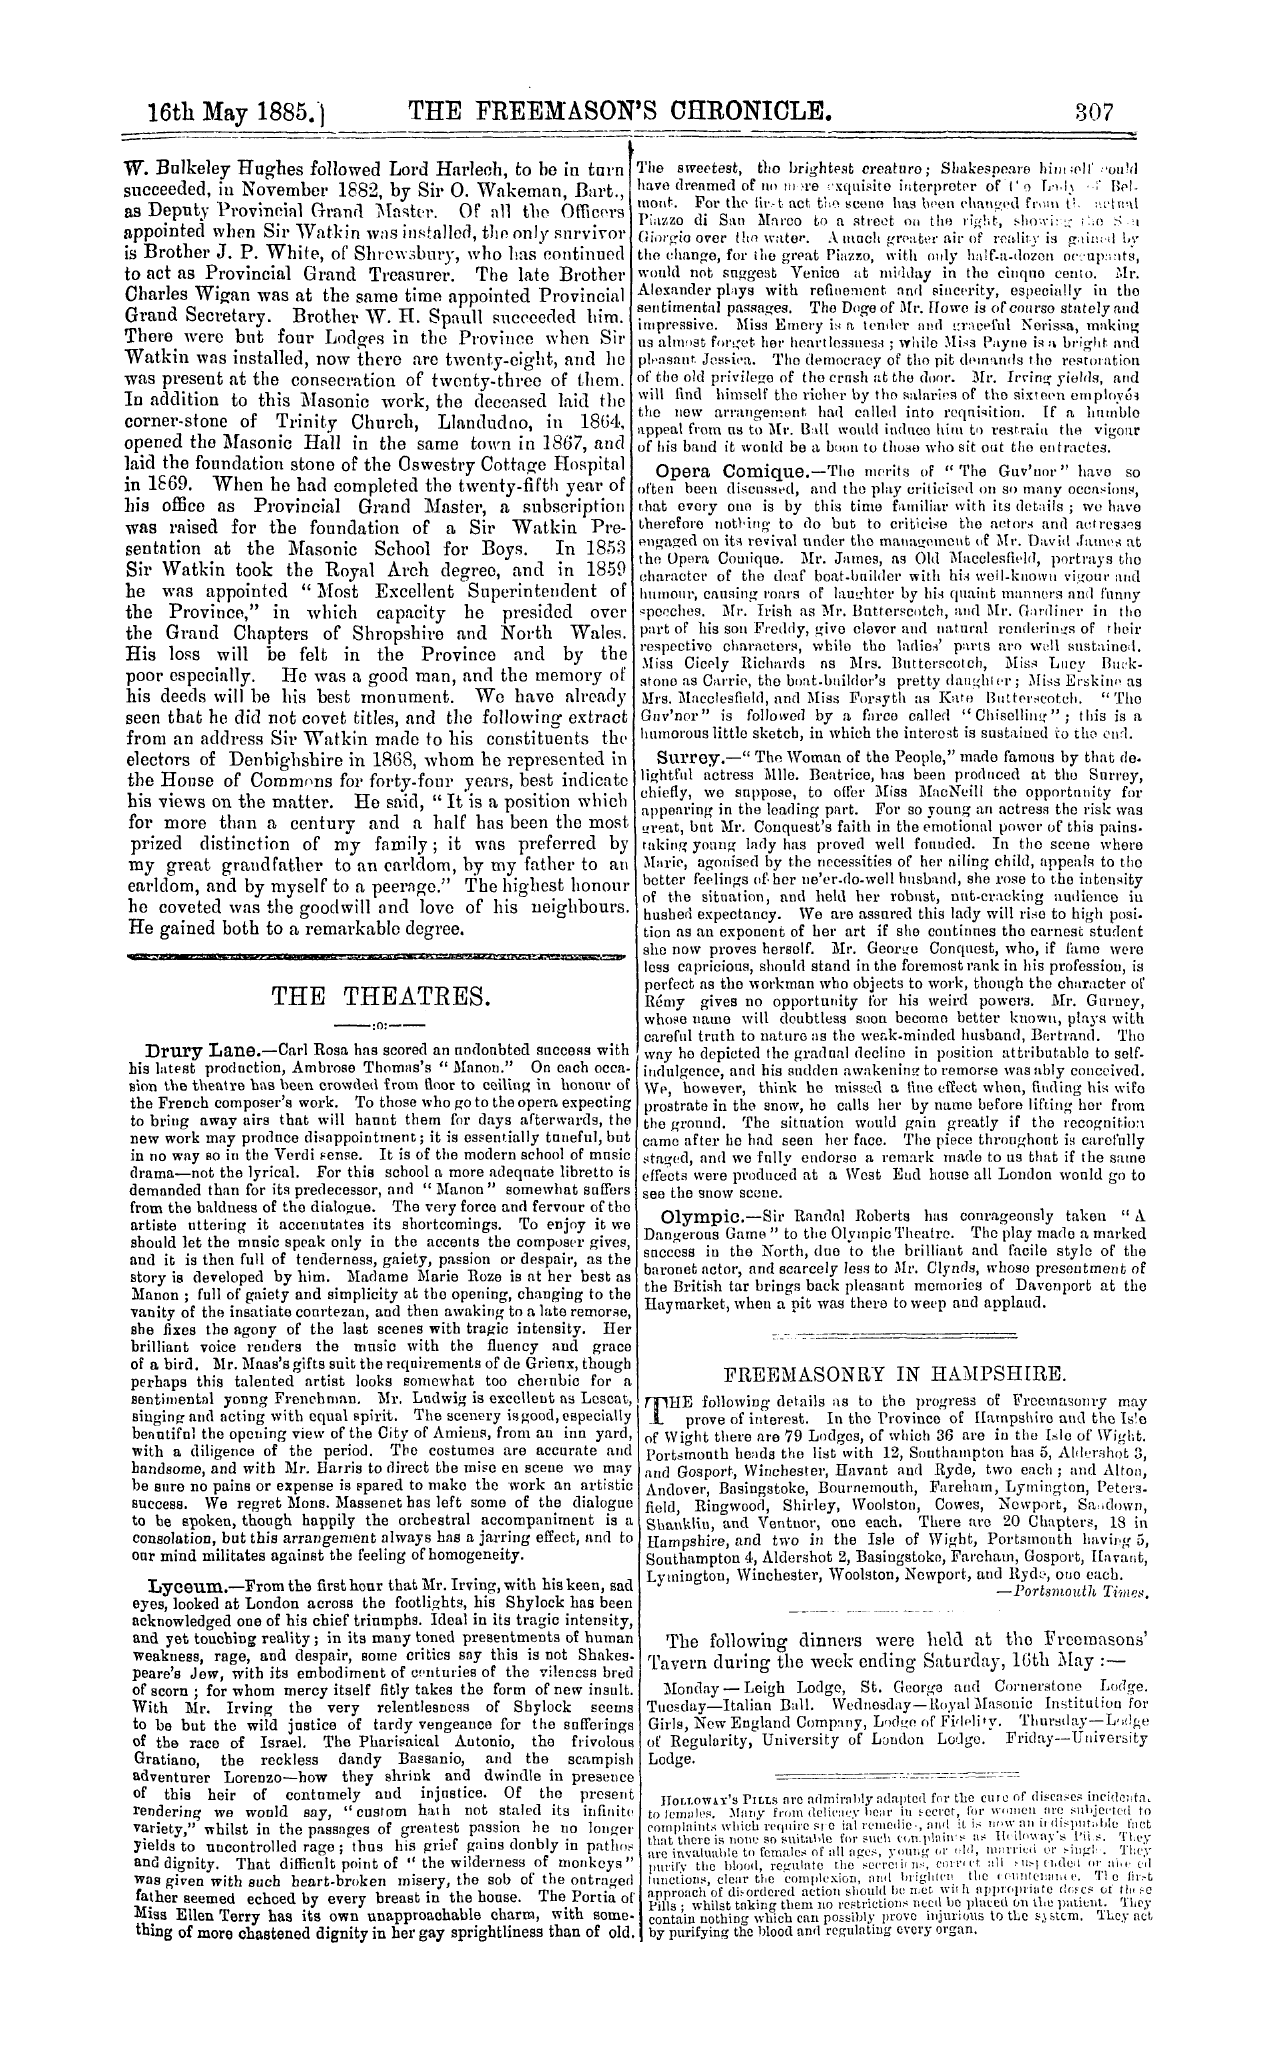 The Freemason's Chronicle: 1885-05-16 - Freemasonry In Hampshire.